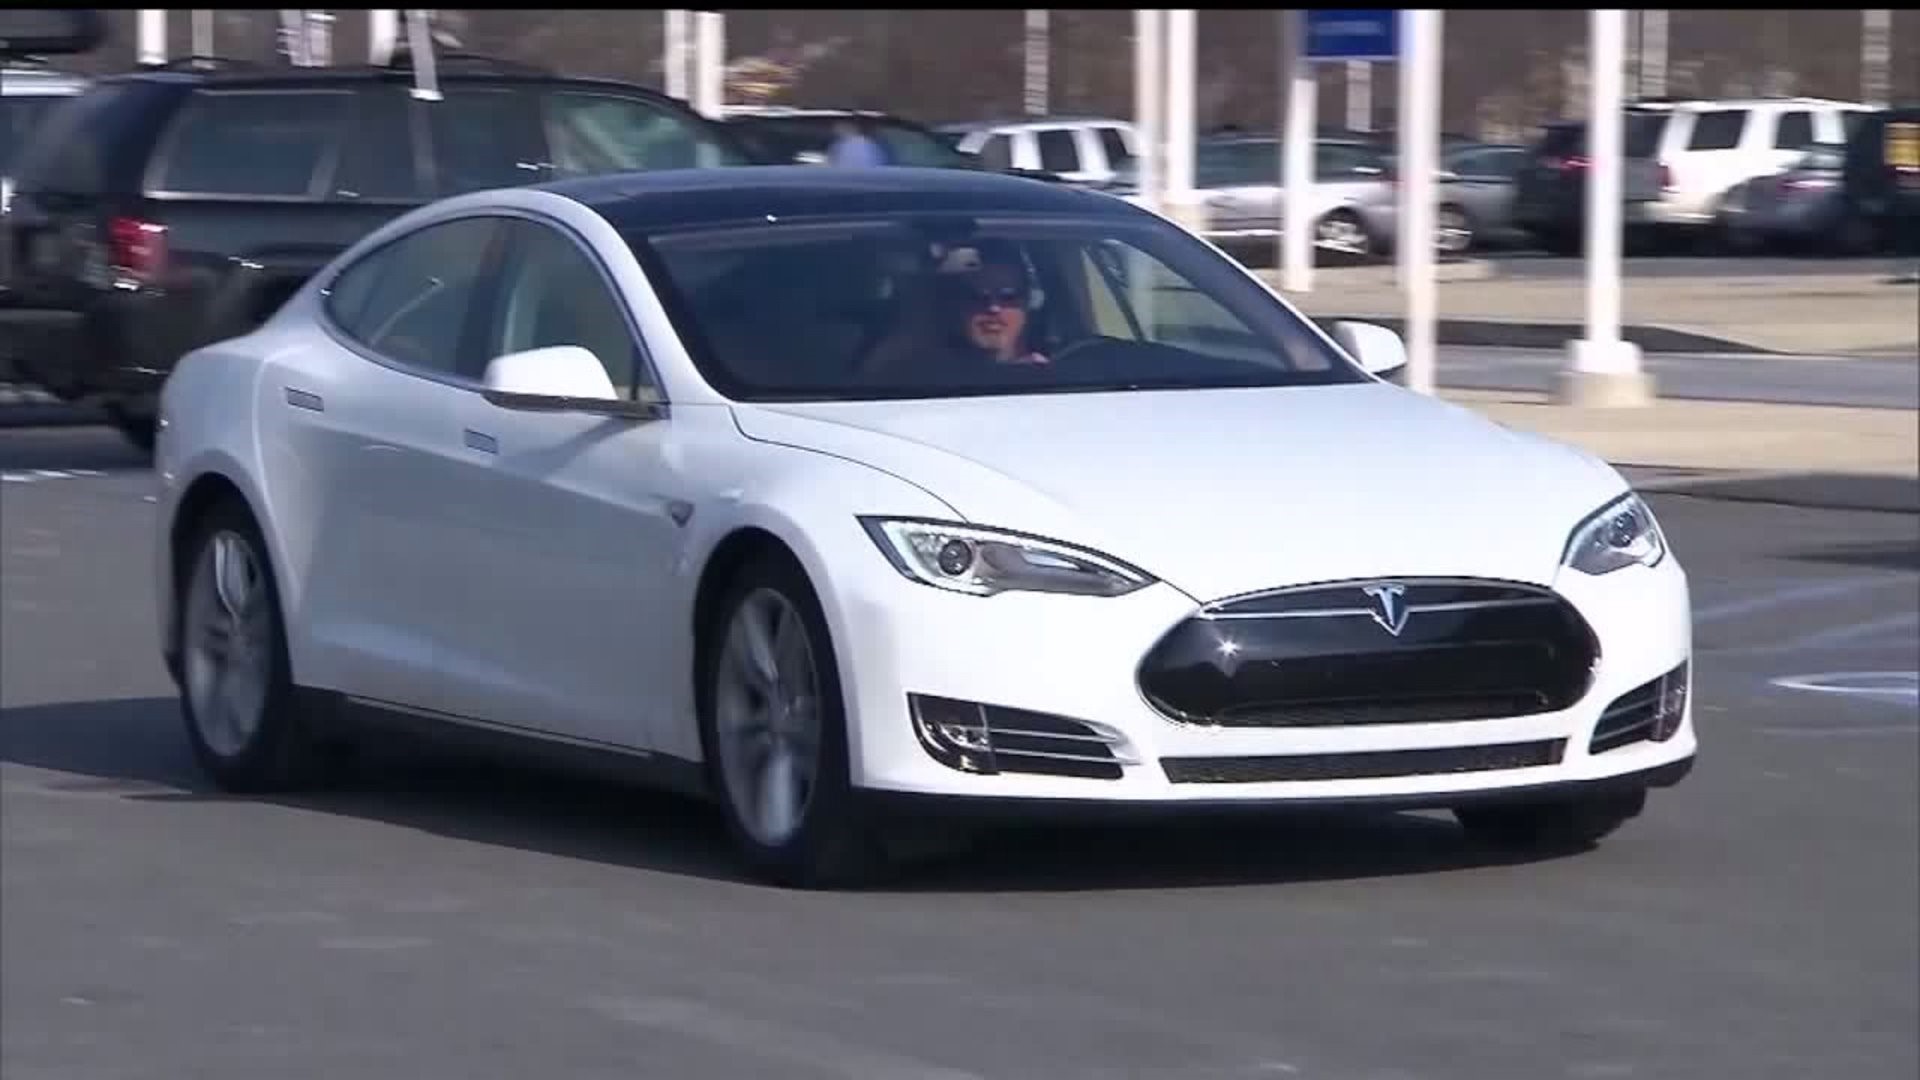 Tesla sets record sales